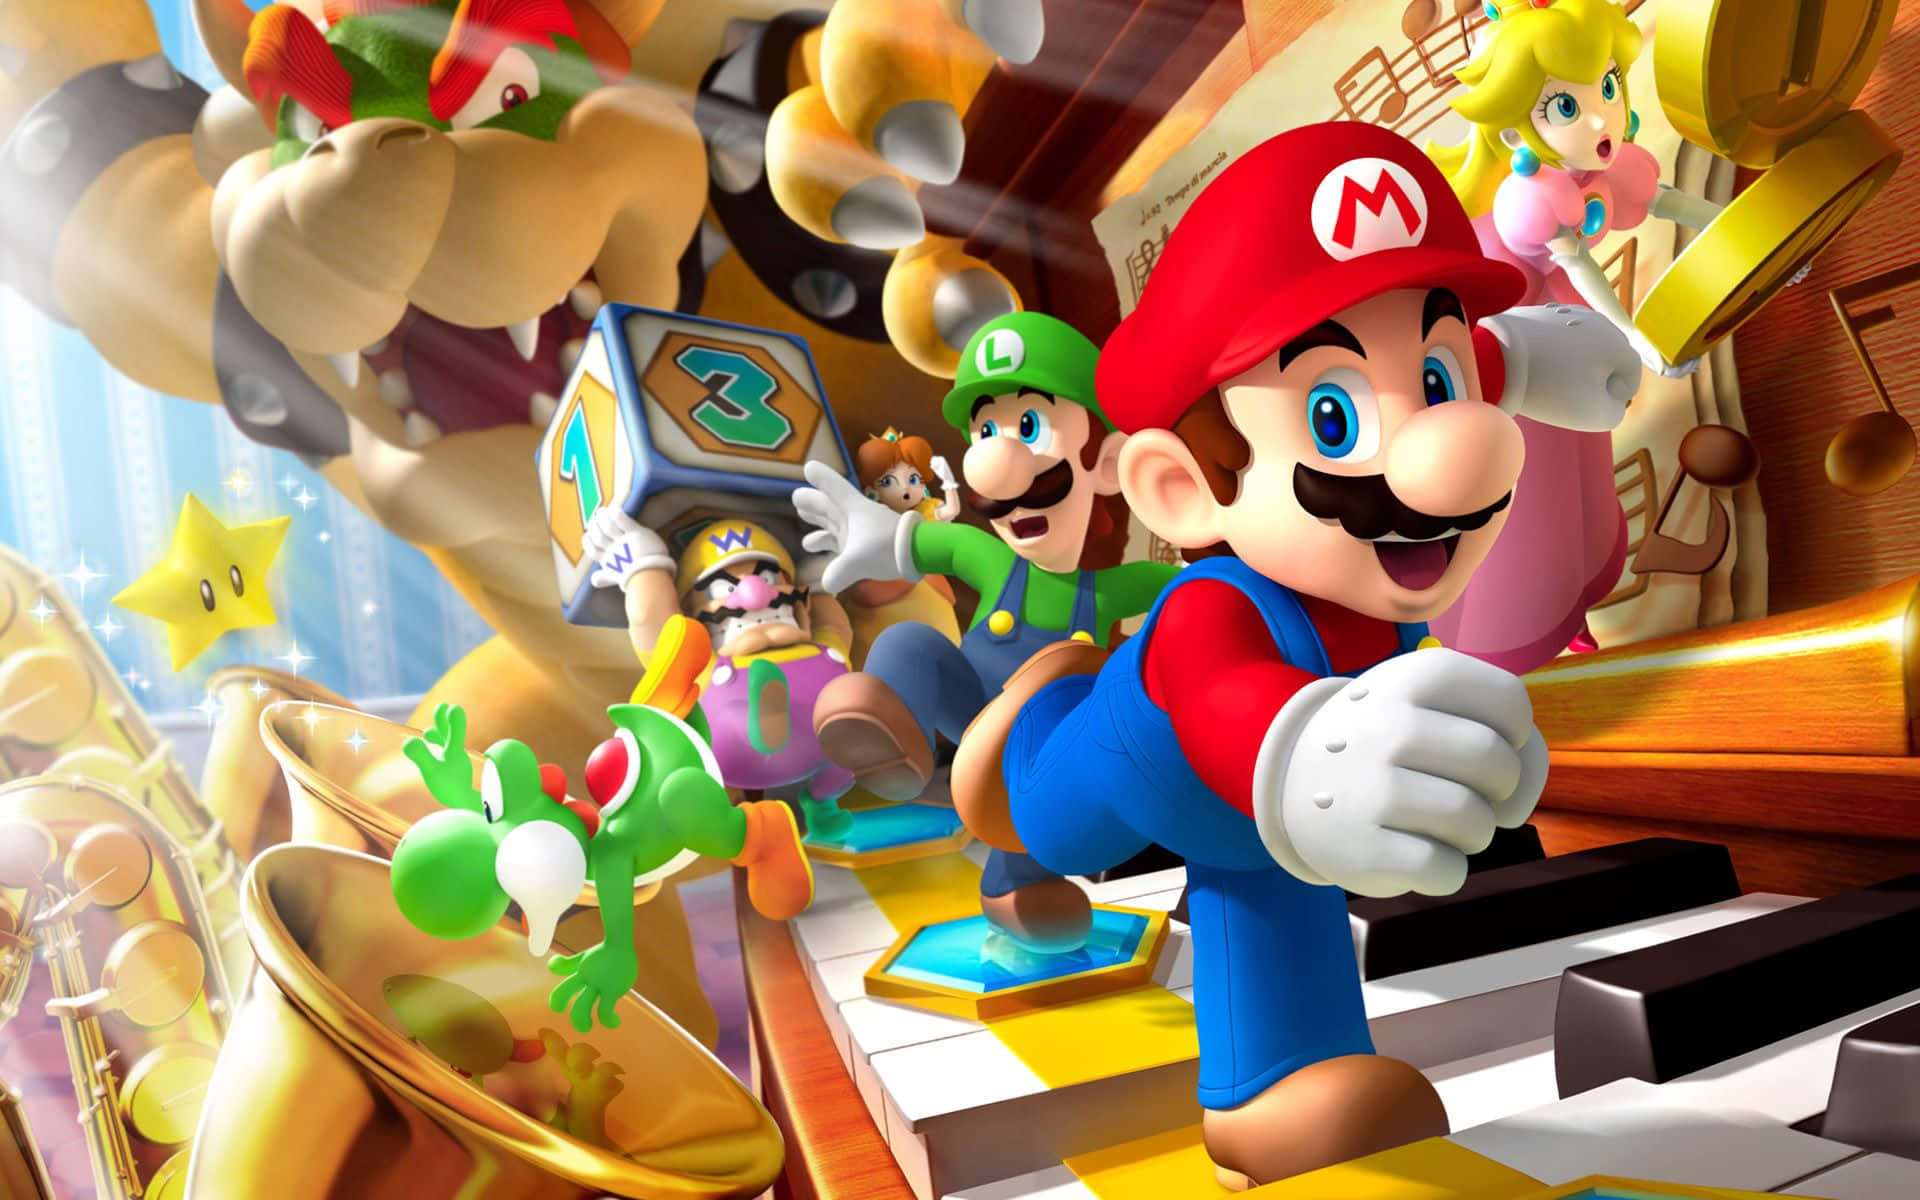 Explore The Mushroom Kingdom With Cool Mario!